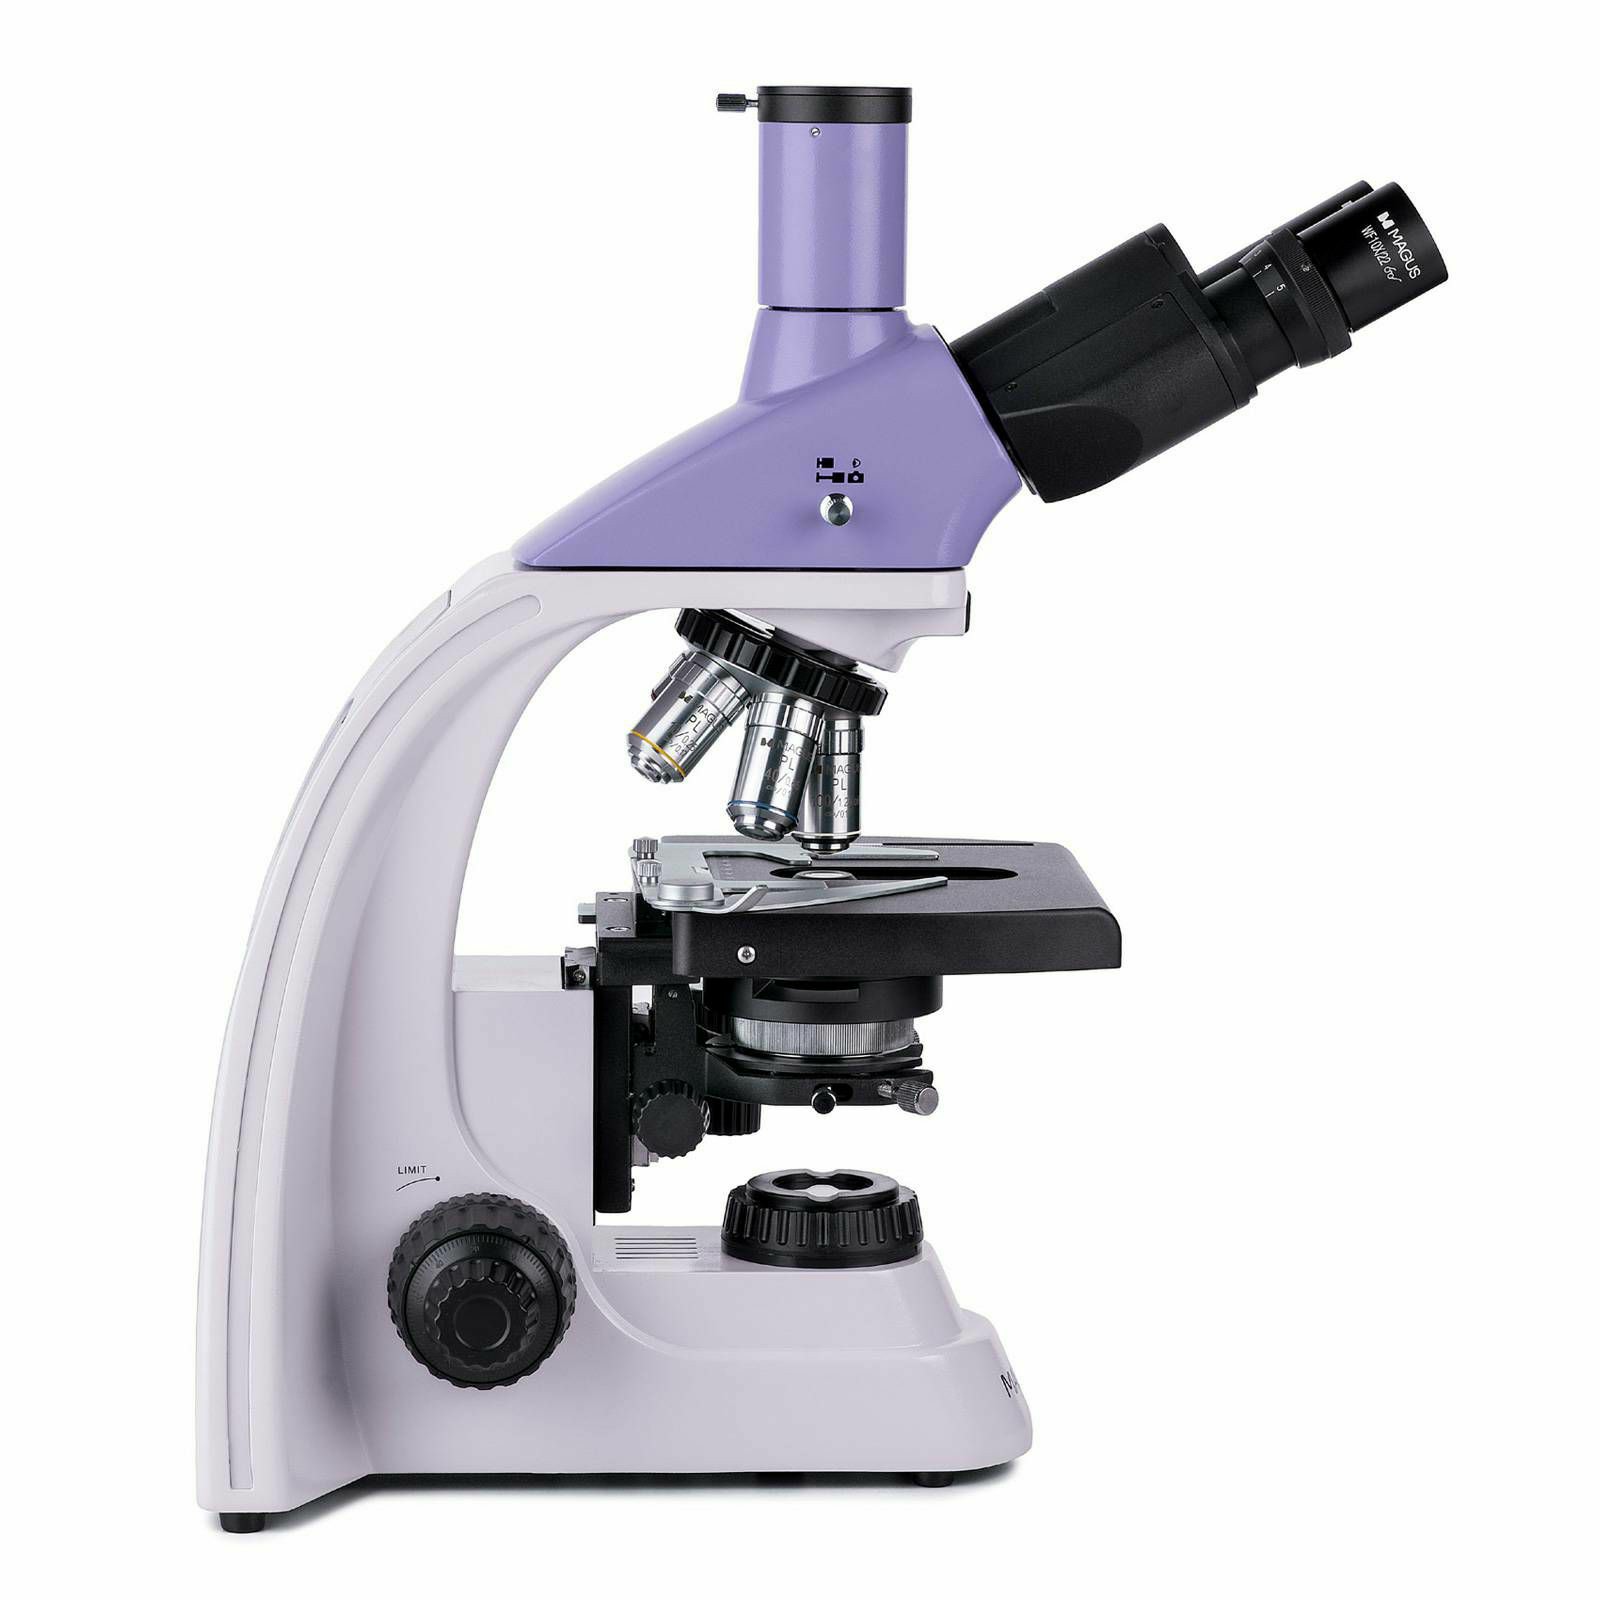 Mikroskop MAGUS Bio D250TL LCD Biological Digital